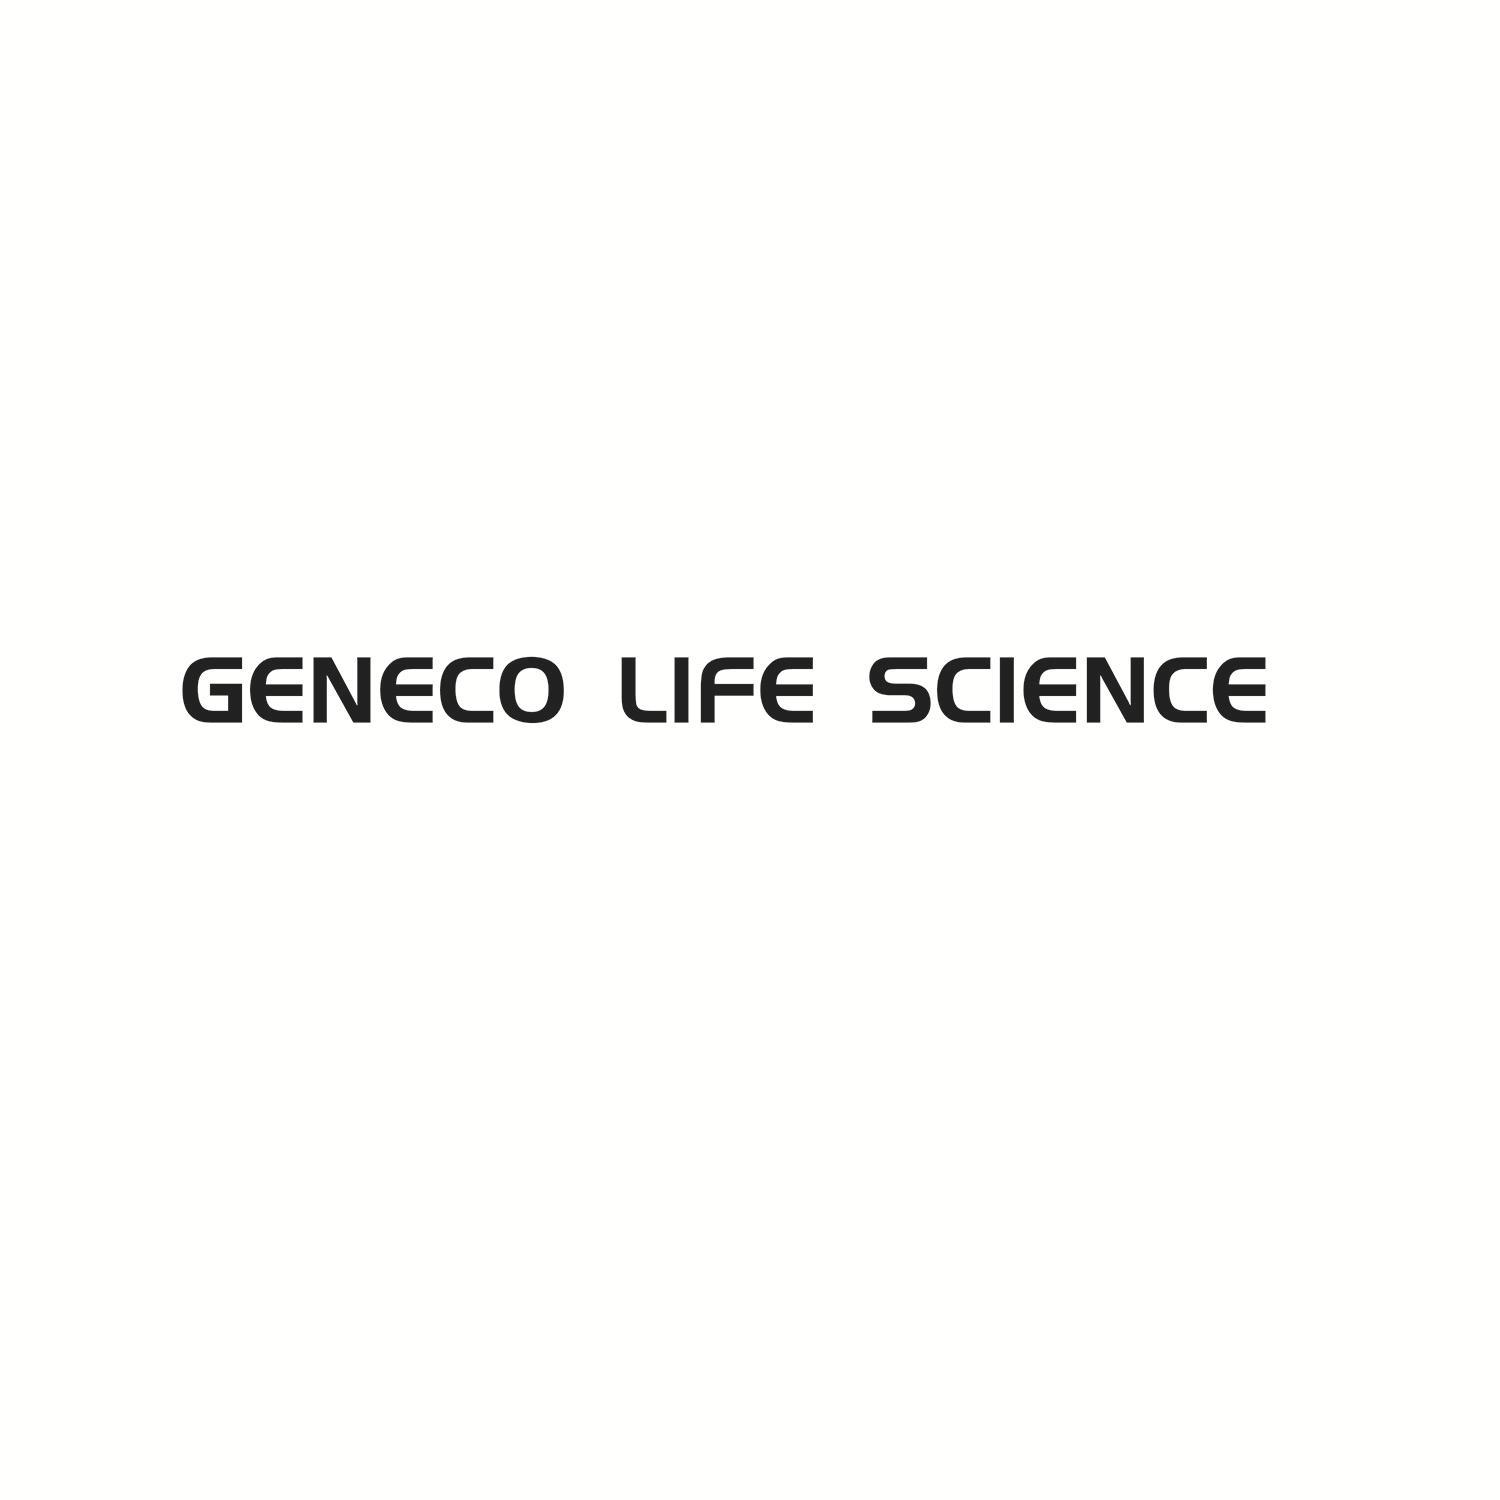 GENECO LIFE SCIENCE